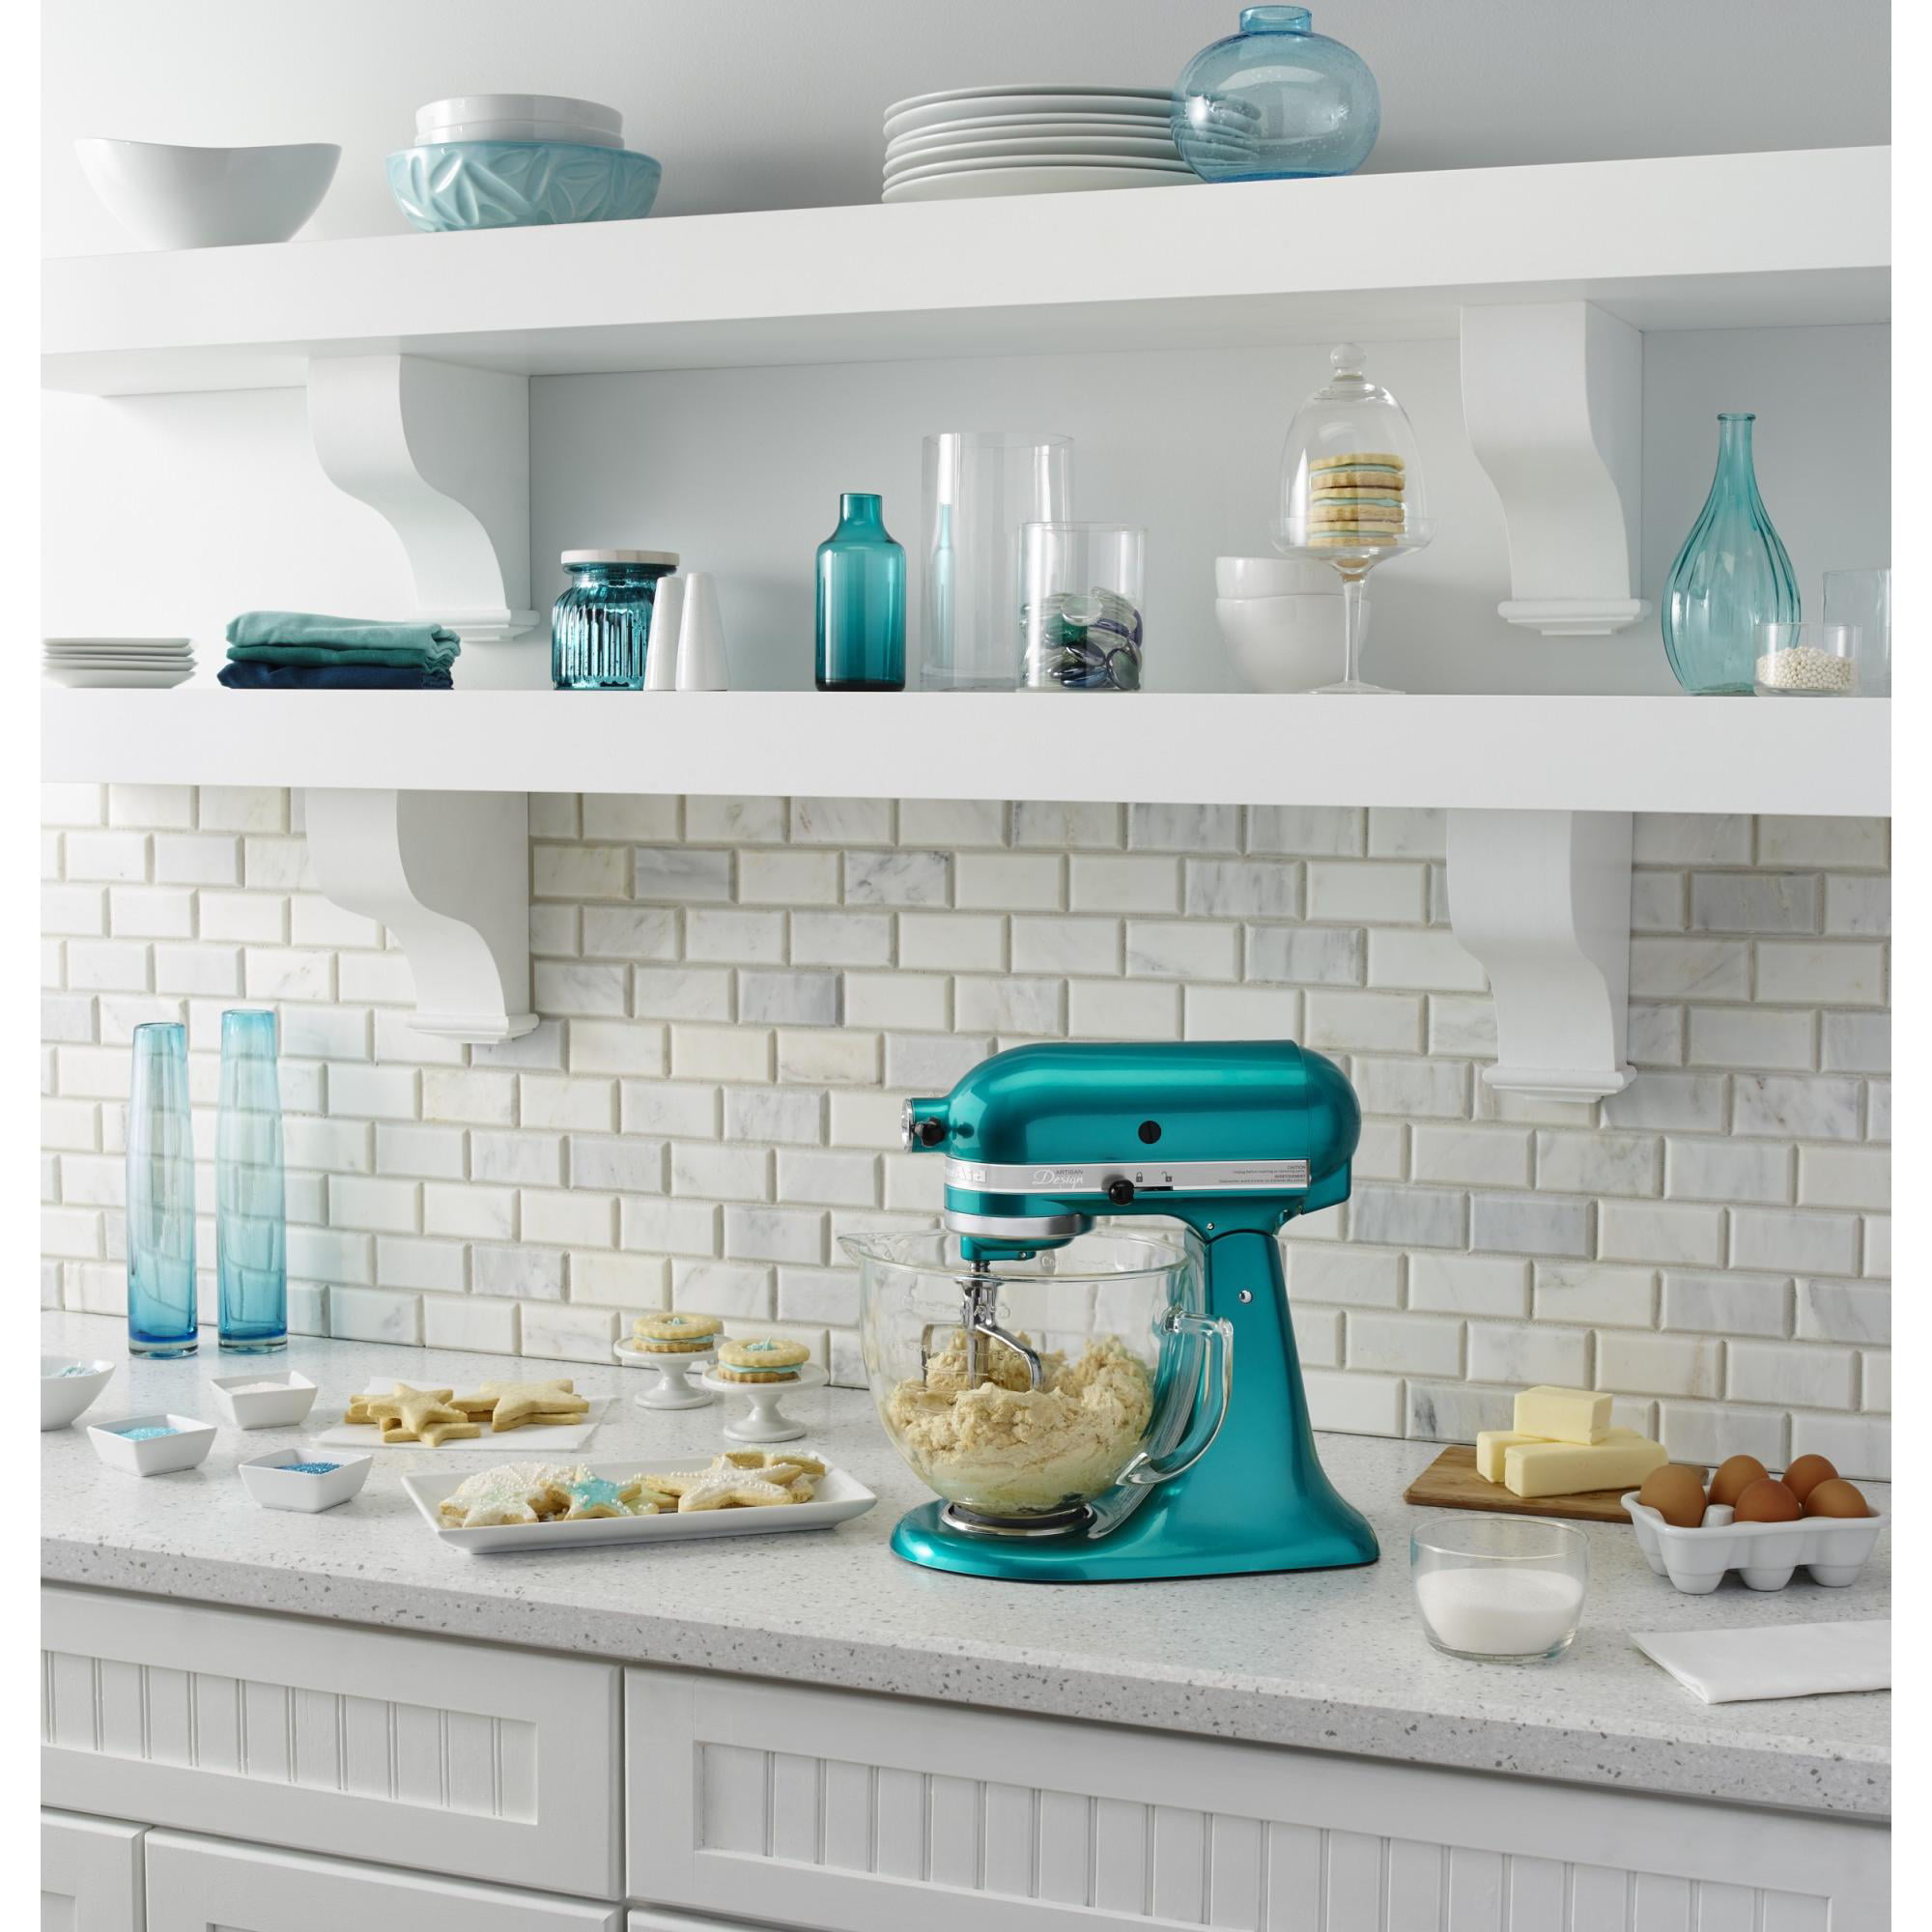 KitchenAid Artisan Design 5-Quart Stand Mixer with Glass Bowl #KSM155GB